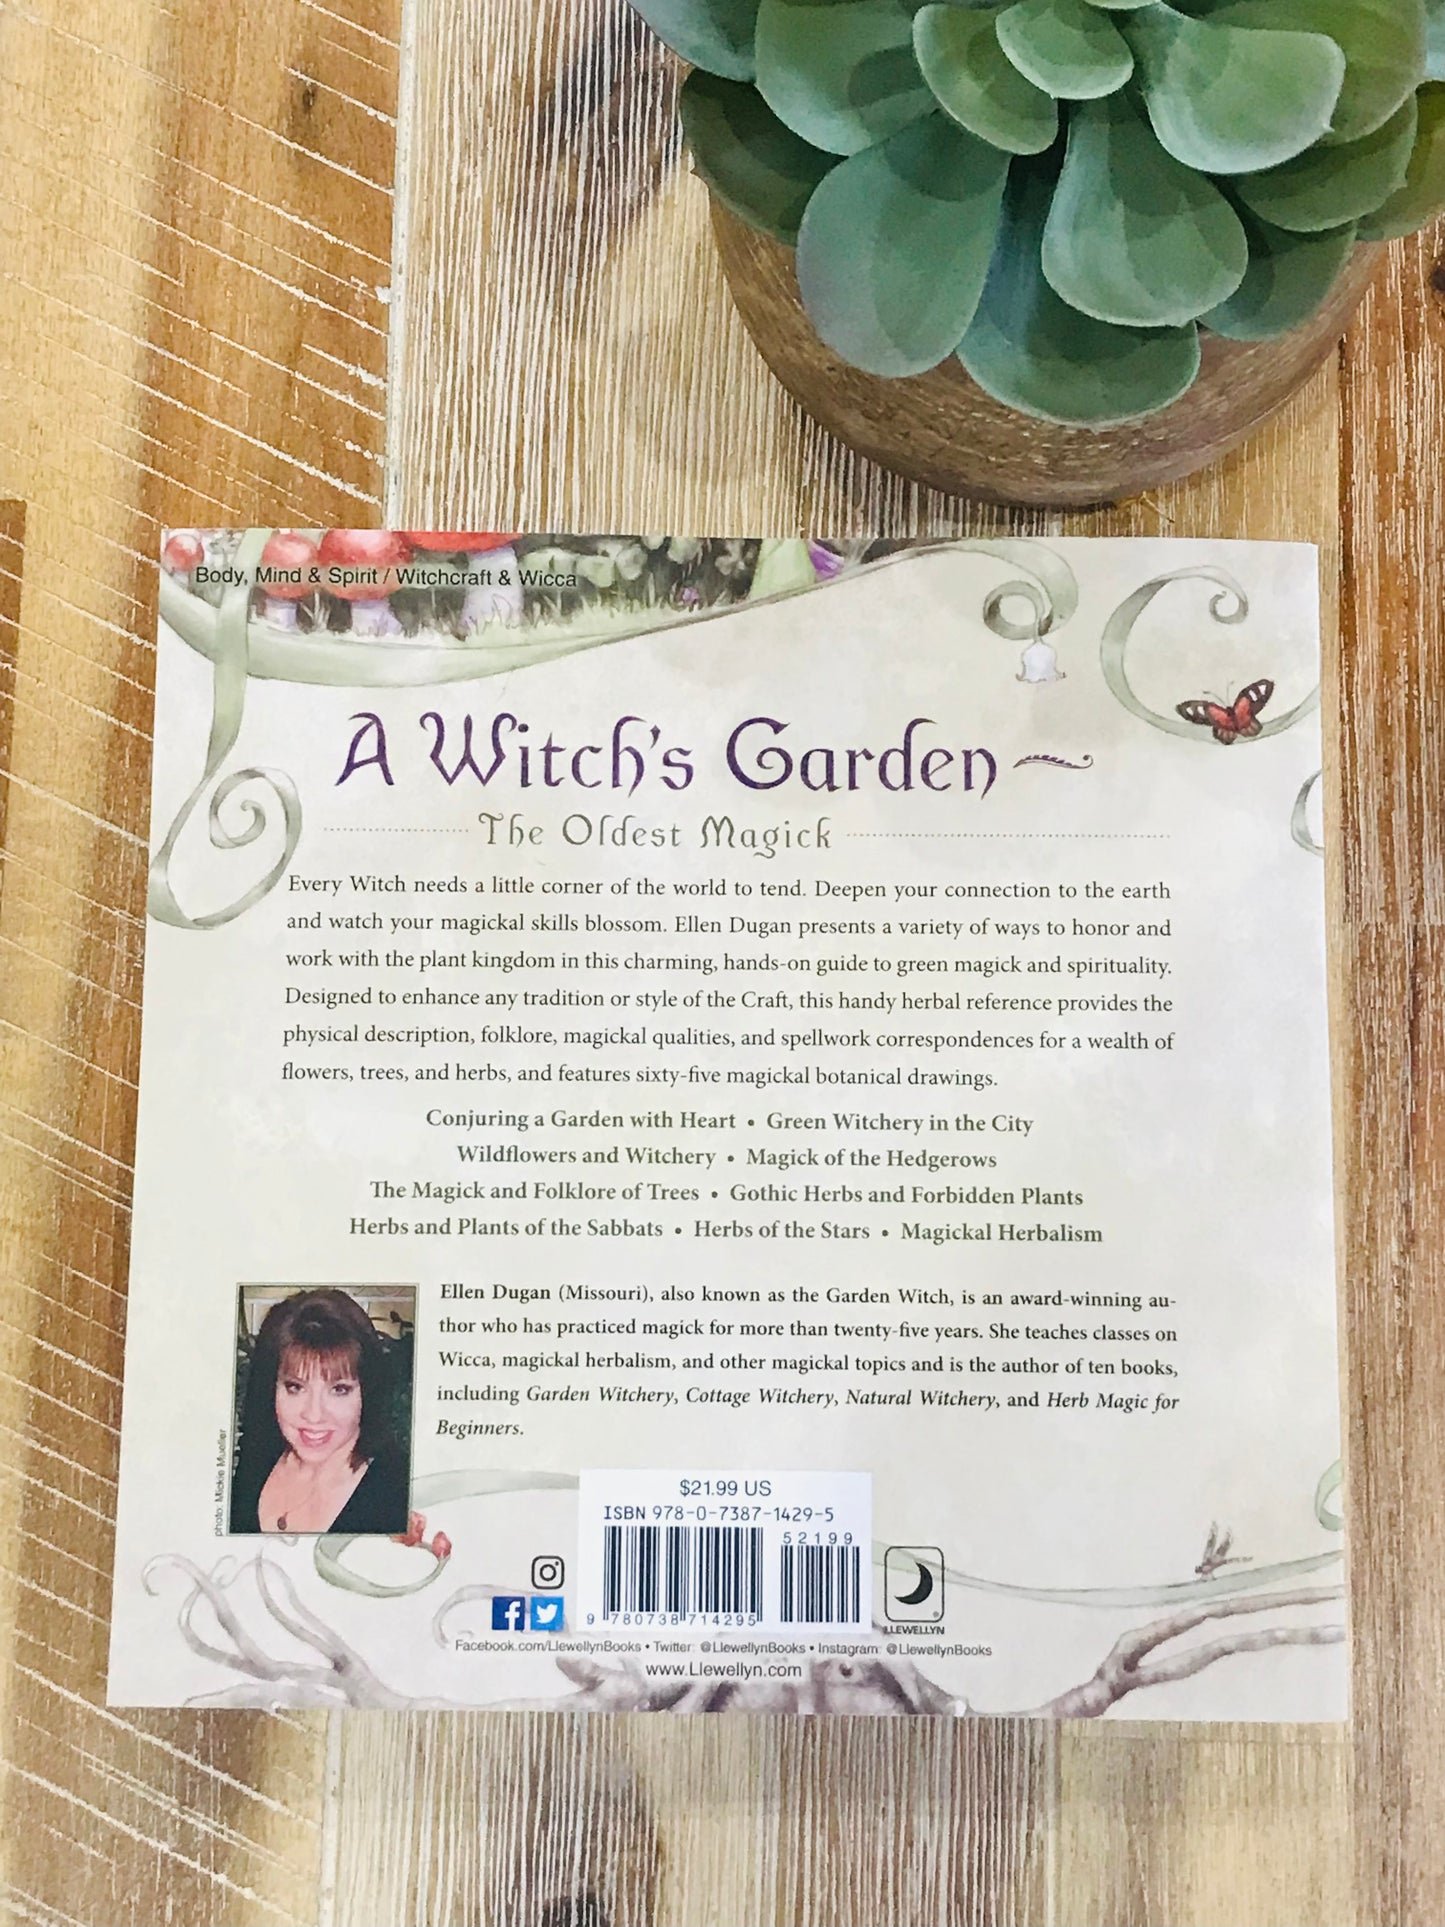 Garden Witch's Herbal: Green Magick, Herbalism & Spirituality